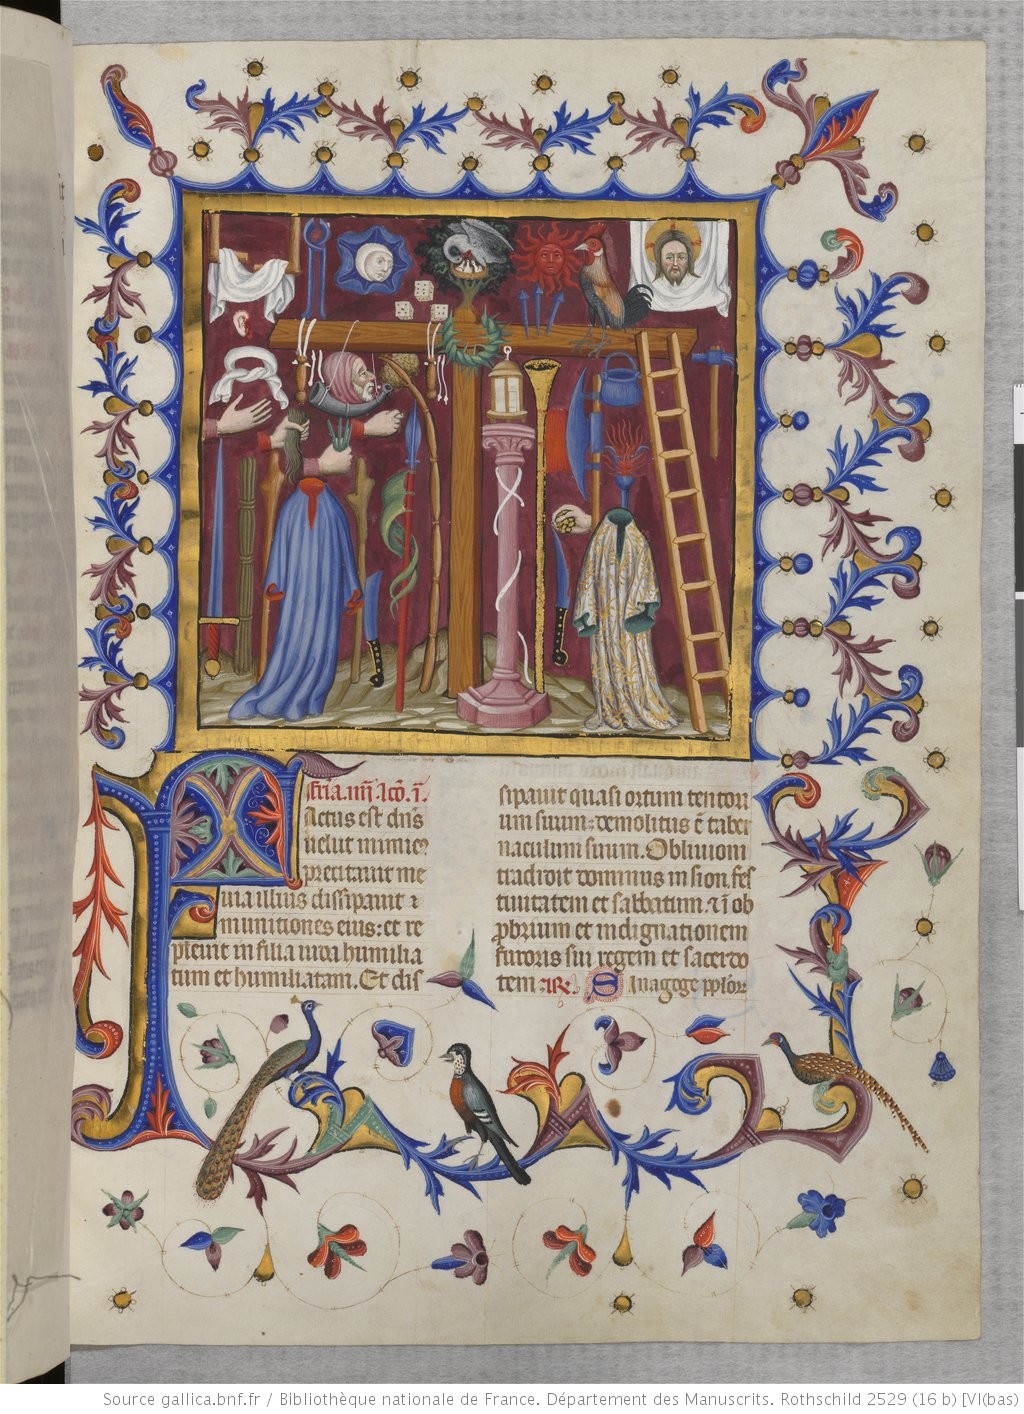 Breviaire de Martin d'Aragon, Catalogne, 1398-1410, BNF Rothschild 2529 (16 b) fol 215v